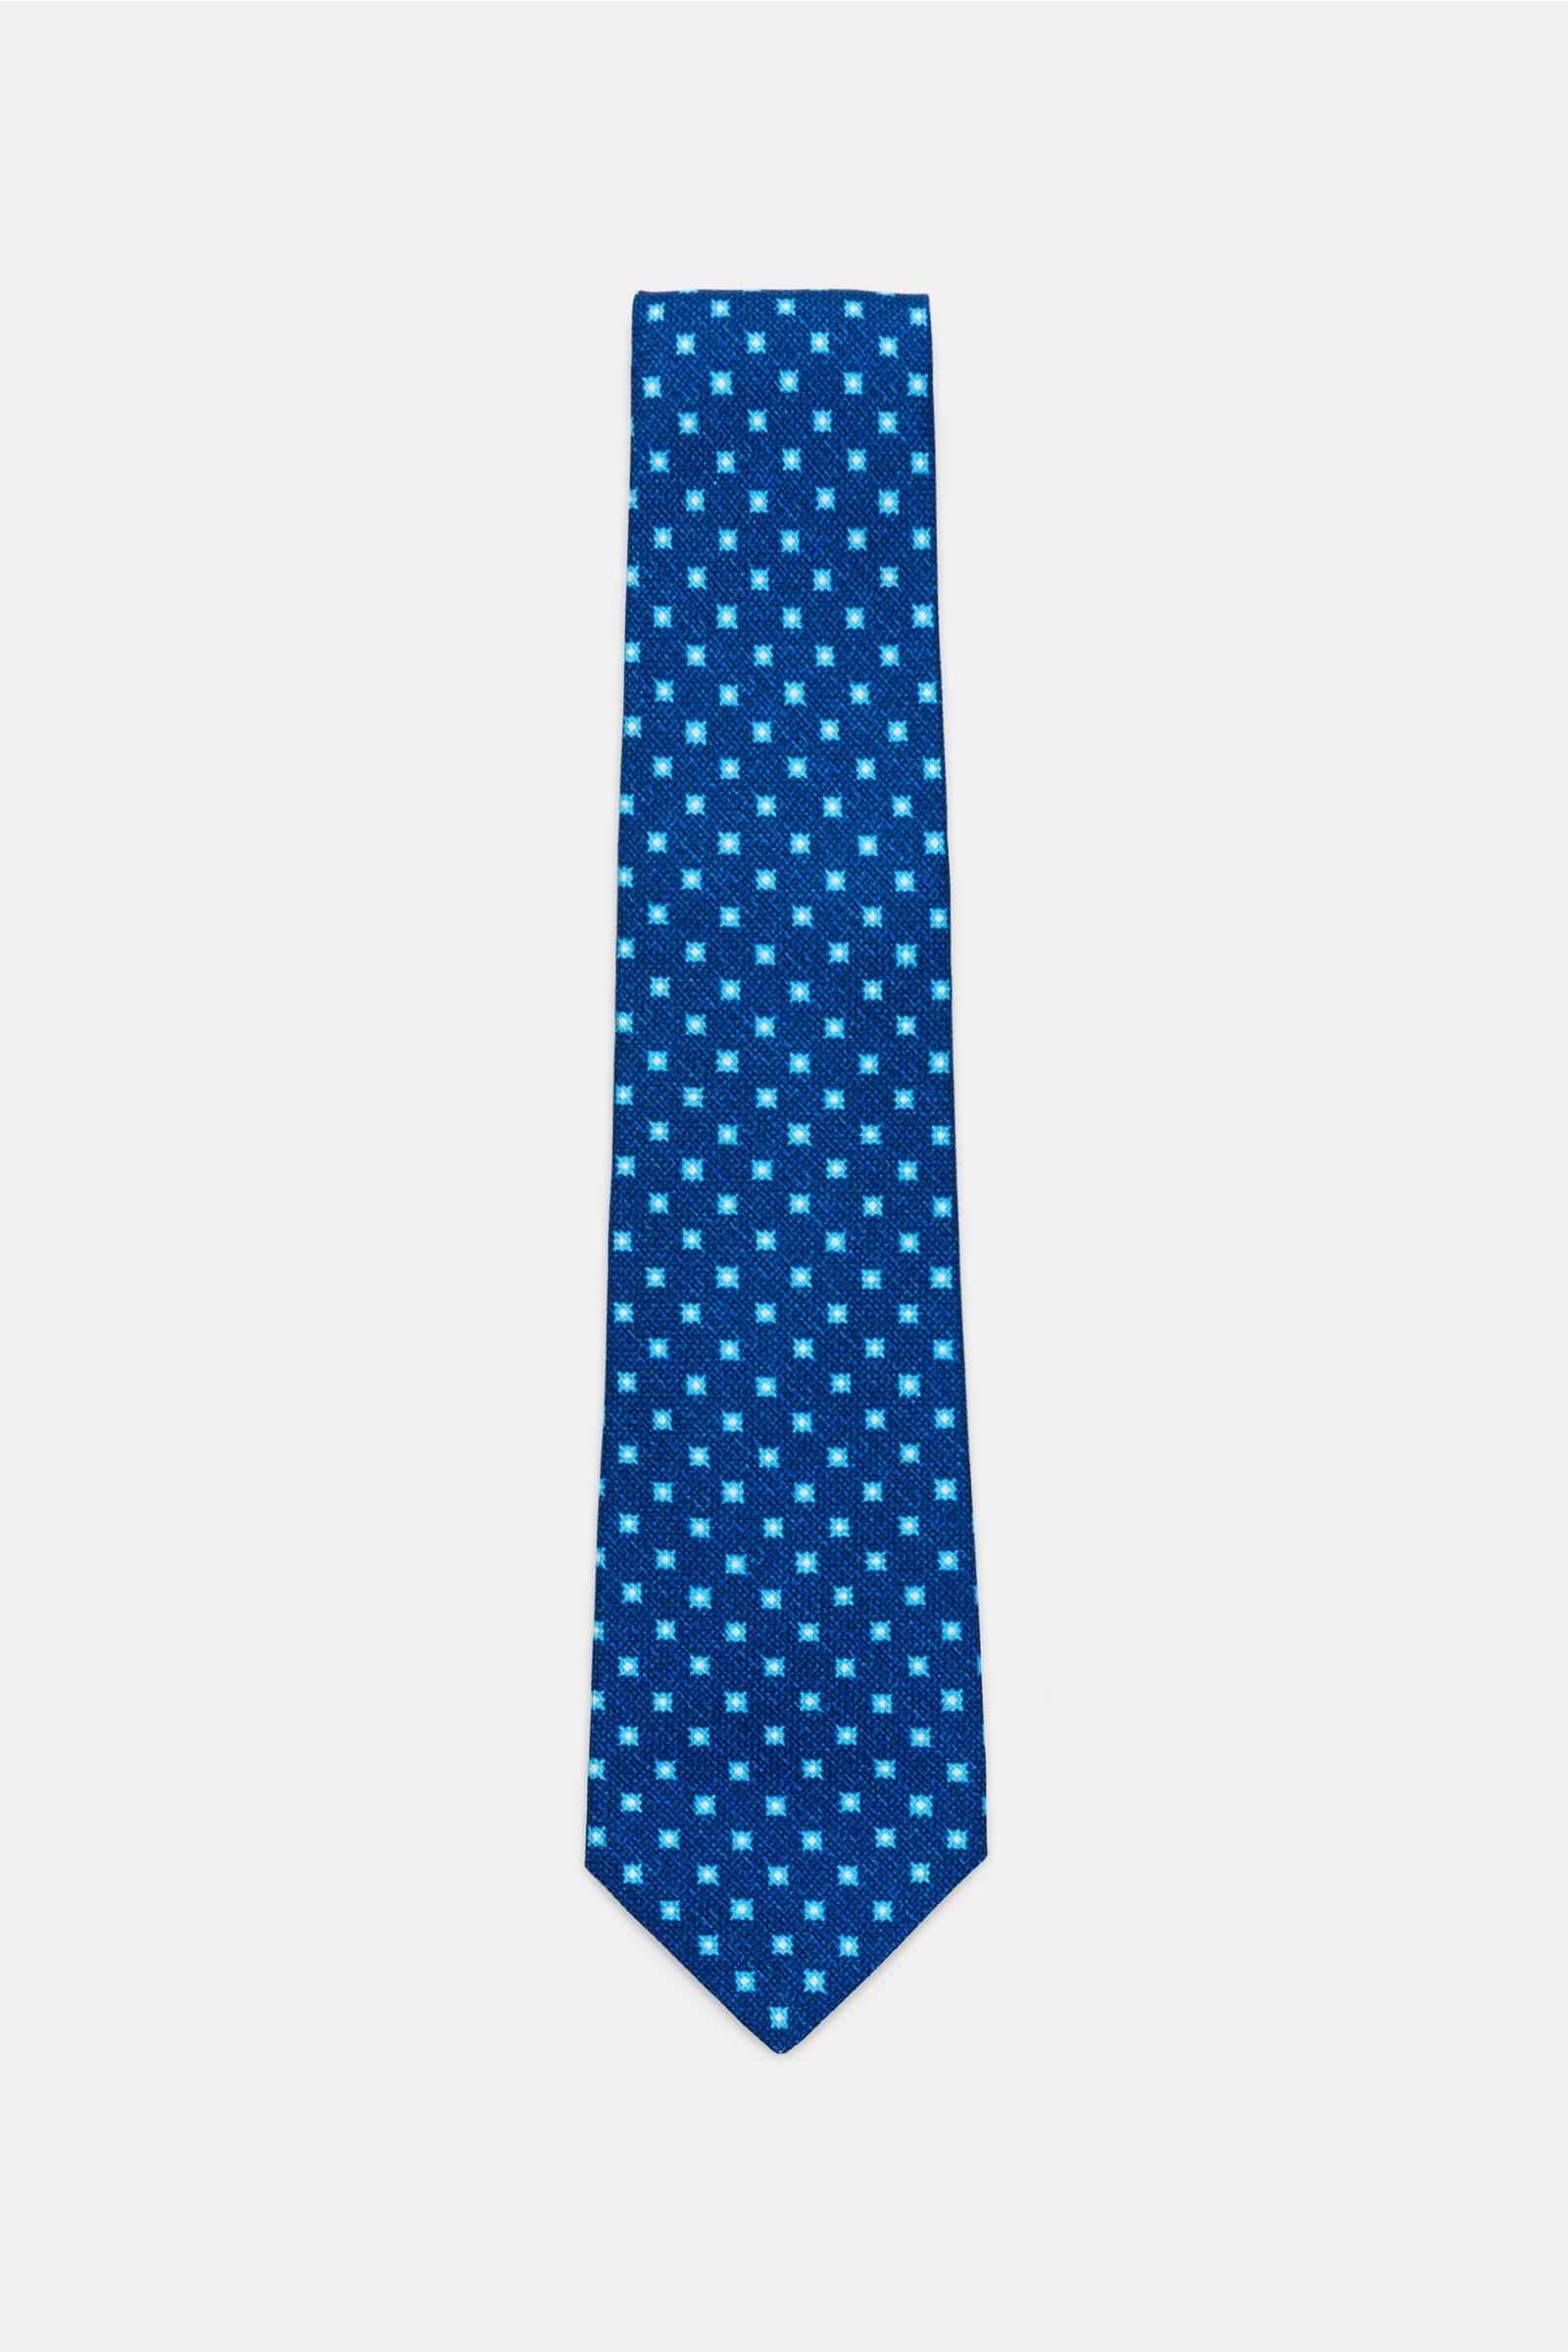 Silk tie navy/azure patterned